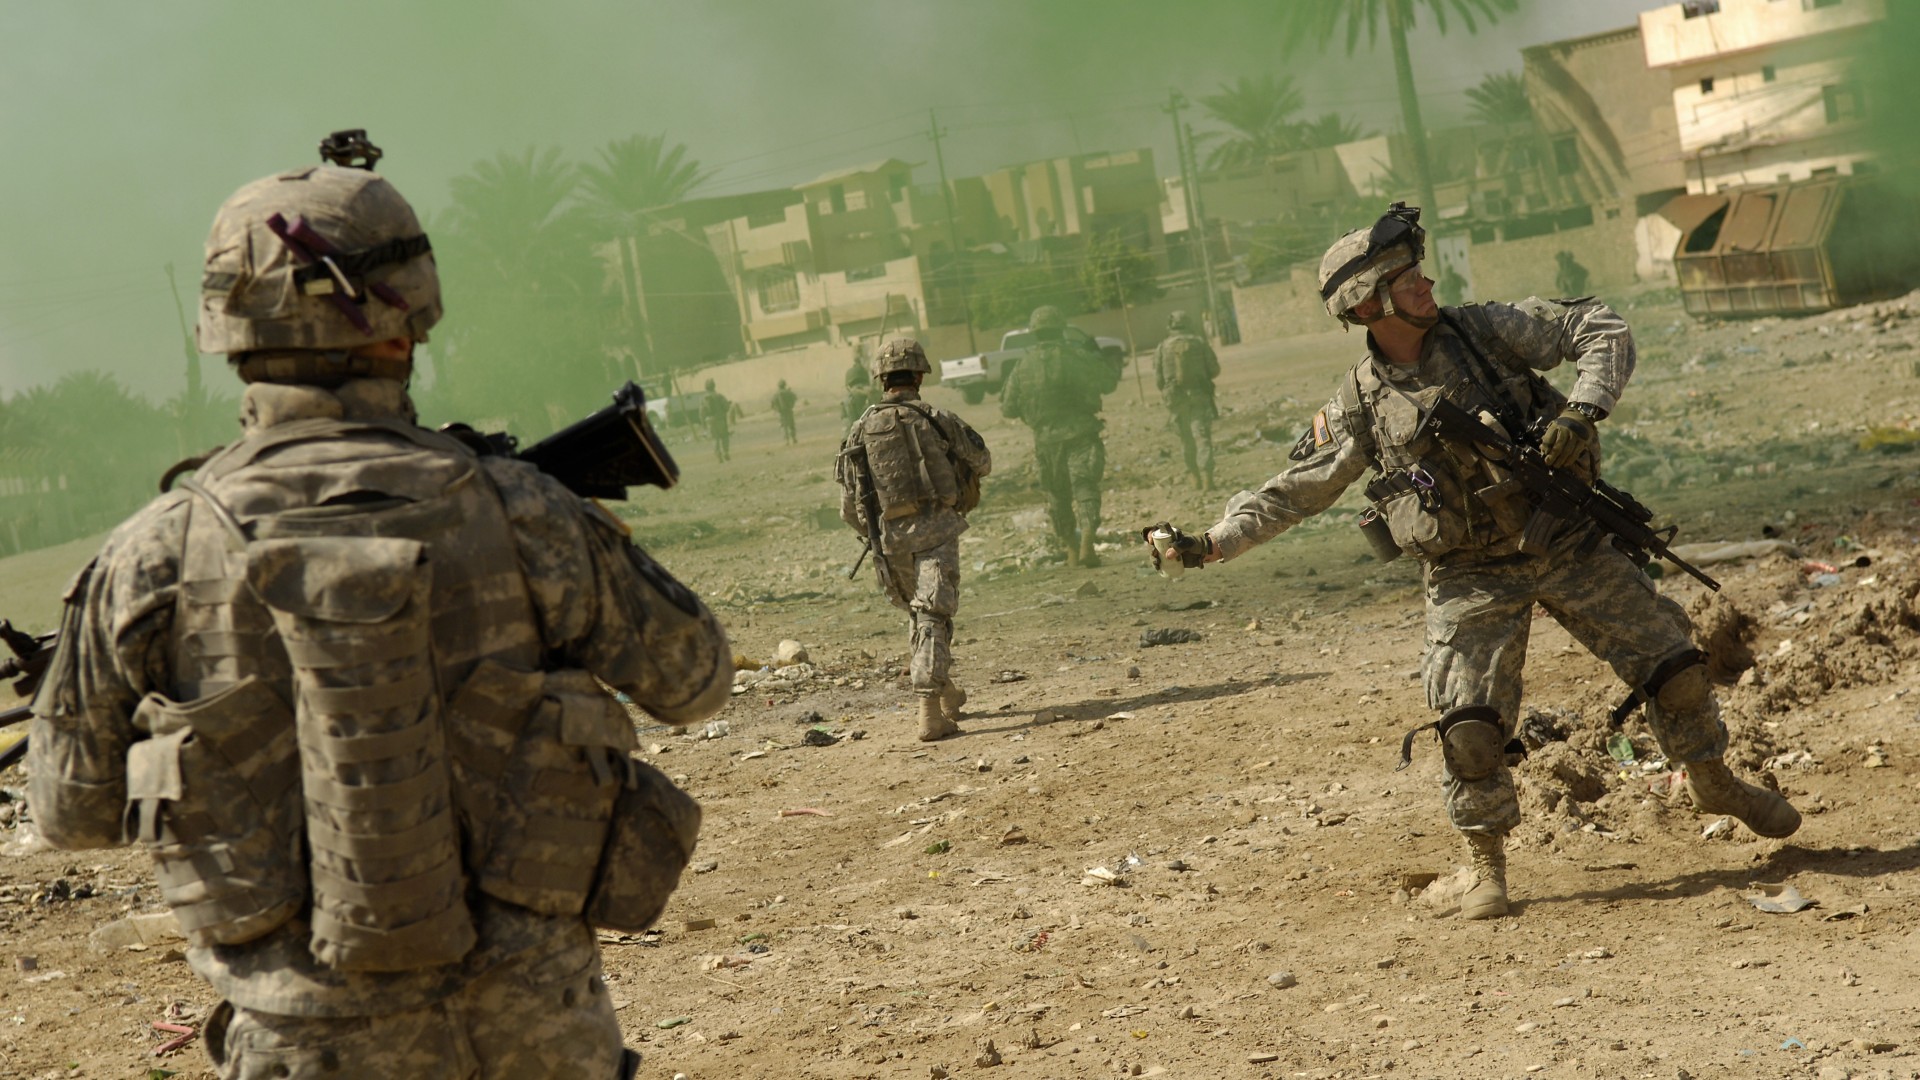 солдат, граната, Ирак, soldier, hand grenade, U.S. Army, evacuation, Iraq, troops (horizontal)